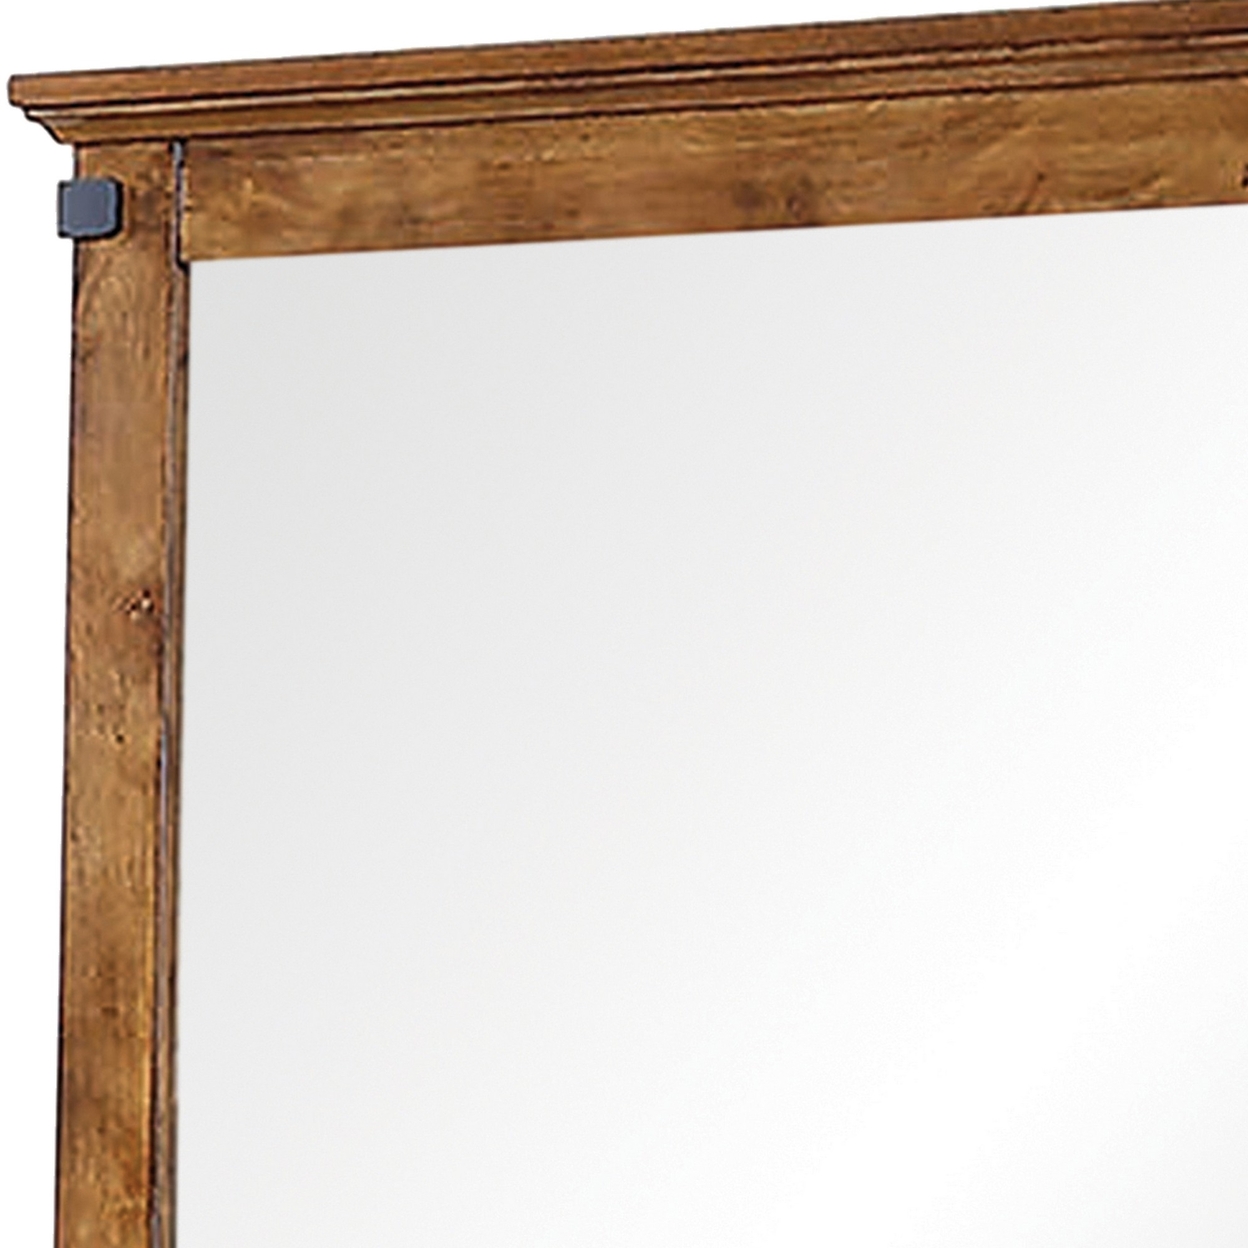 49 Inch Rustic Wood Farmhouse Mirror, Metal Corner Accents, Rustic Brown- Saltoro Sherpi